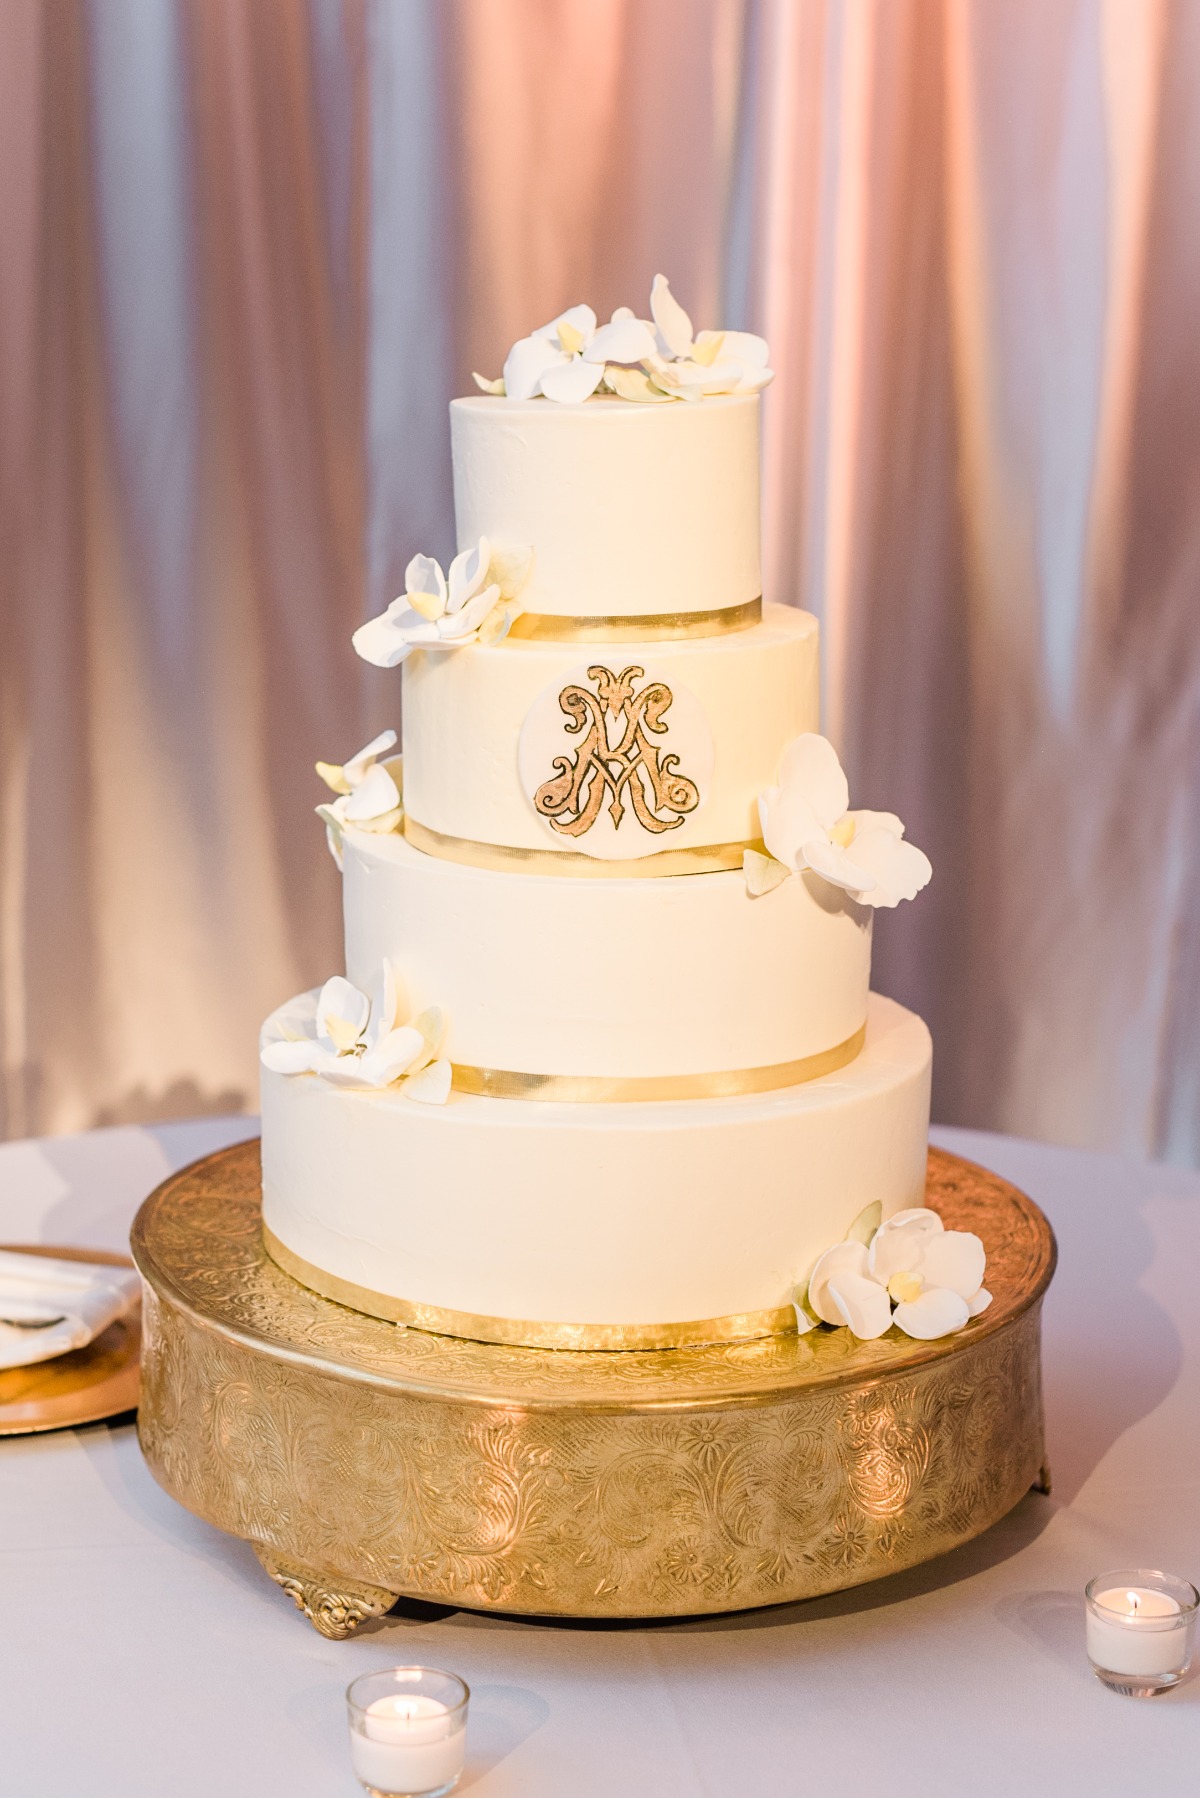 White monogramed wedding cake